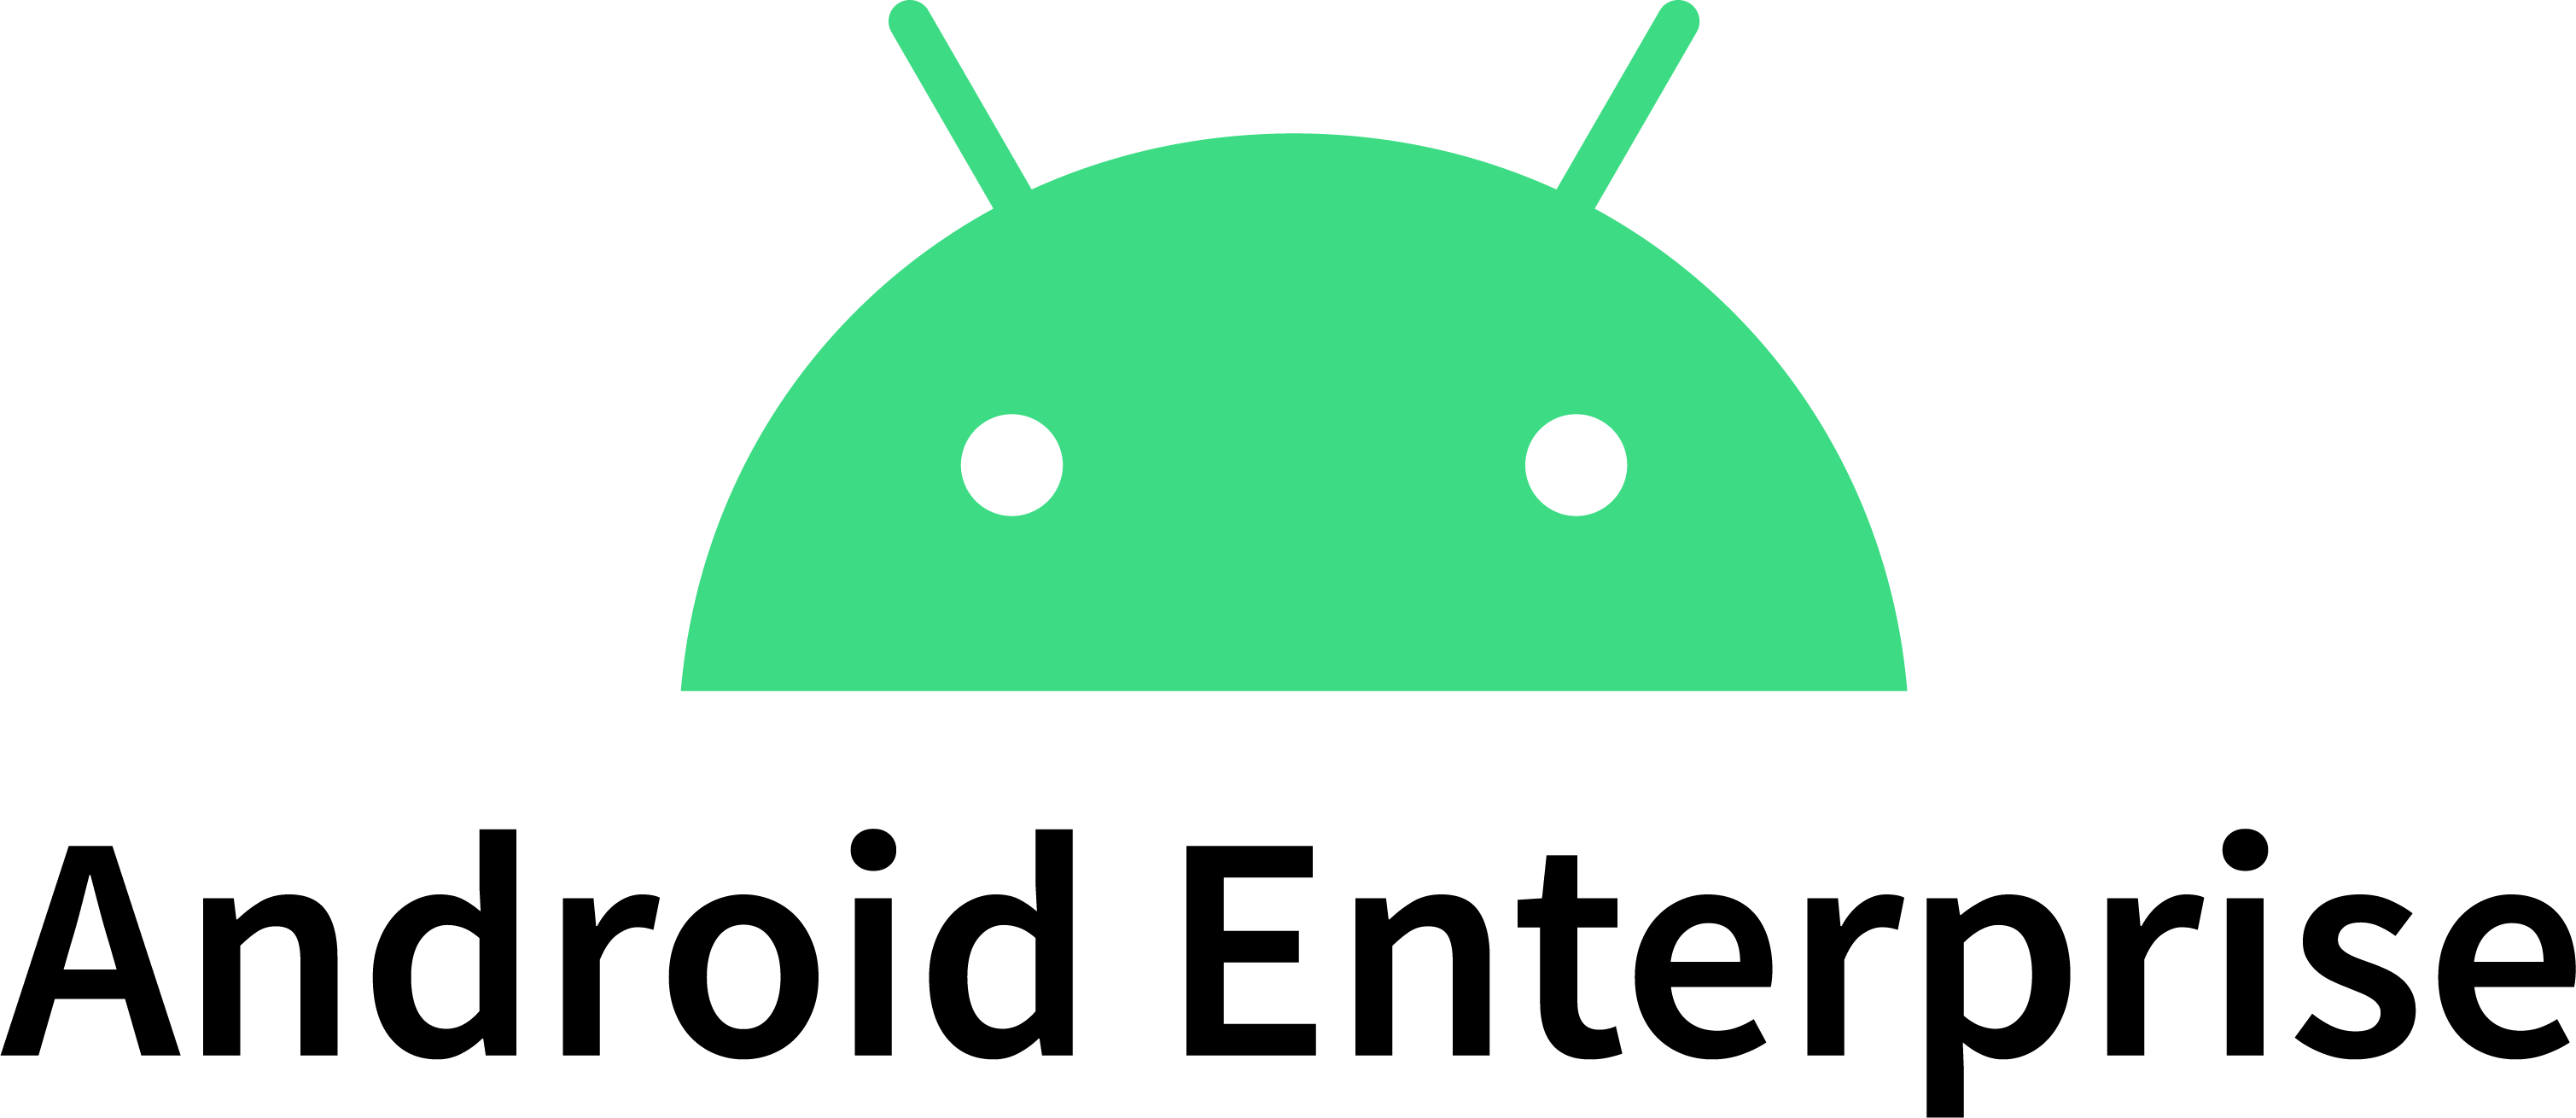 Android Enterprise - Marketplace | Hexnode MDM